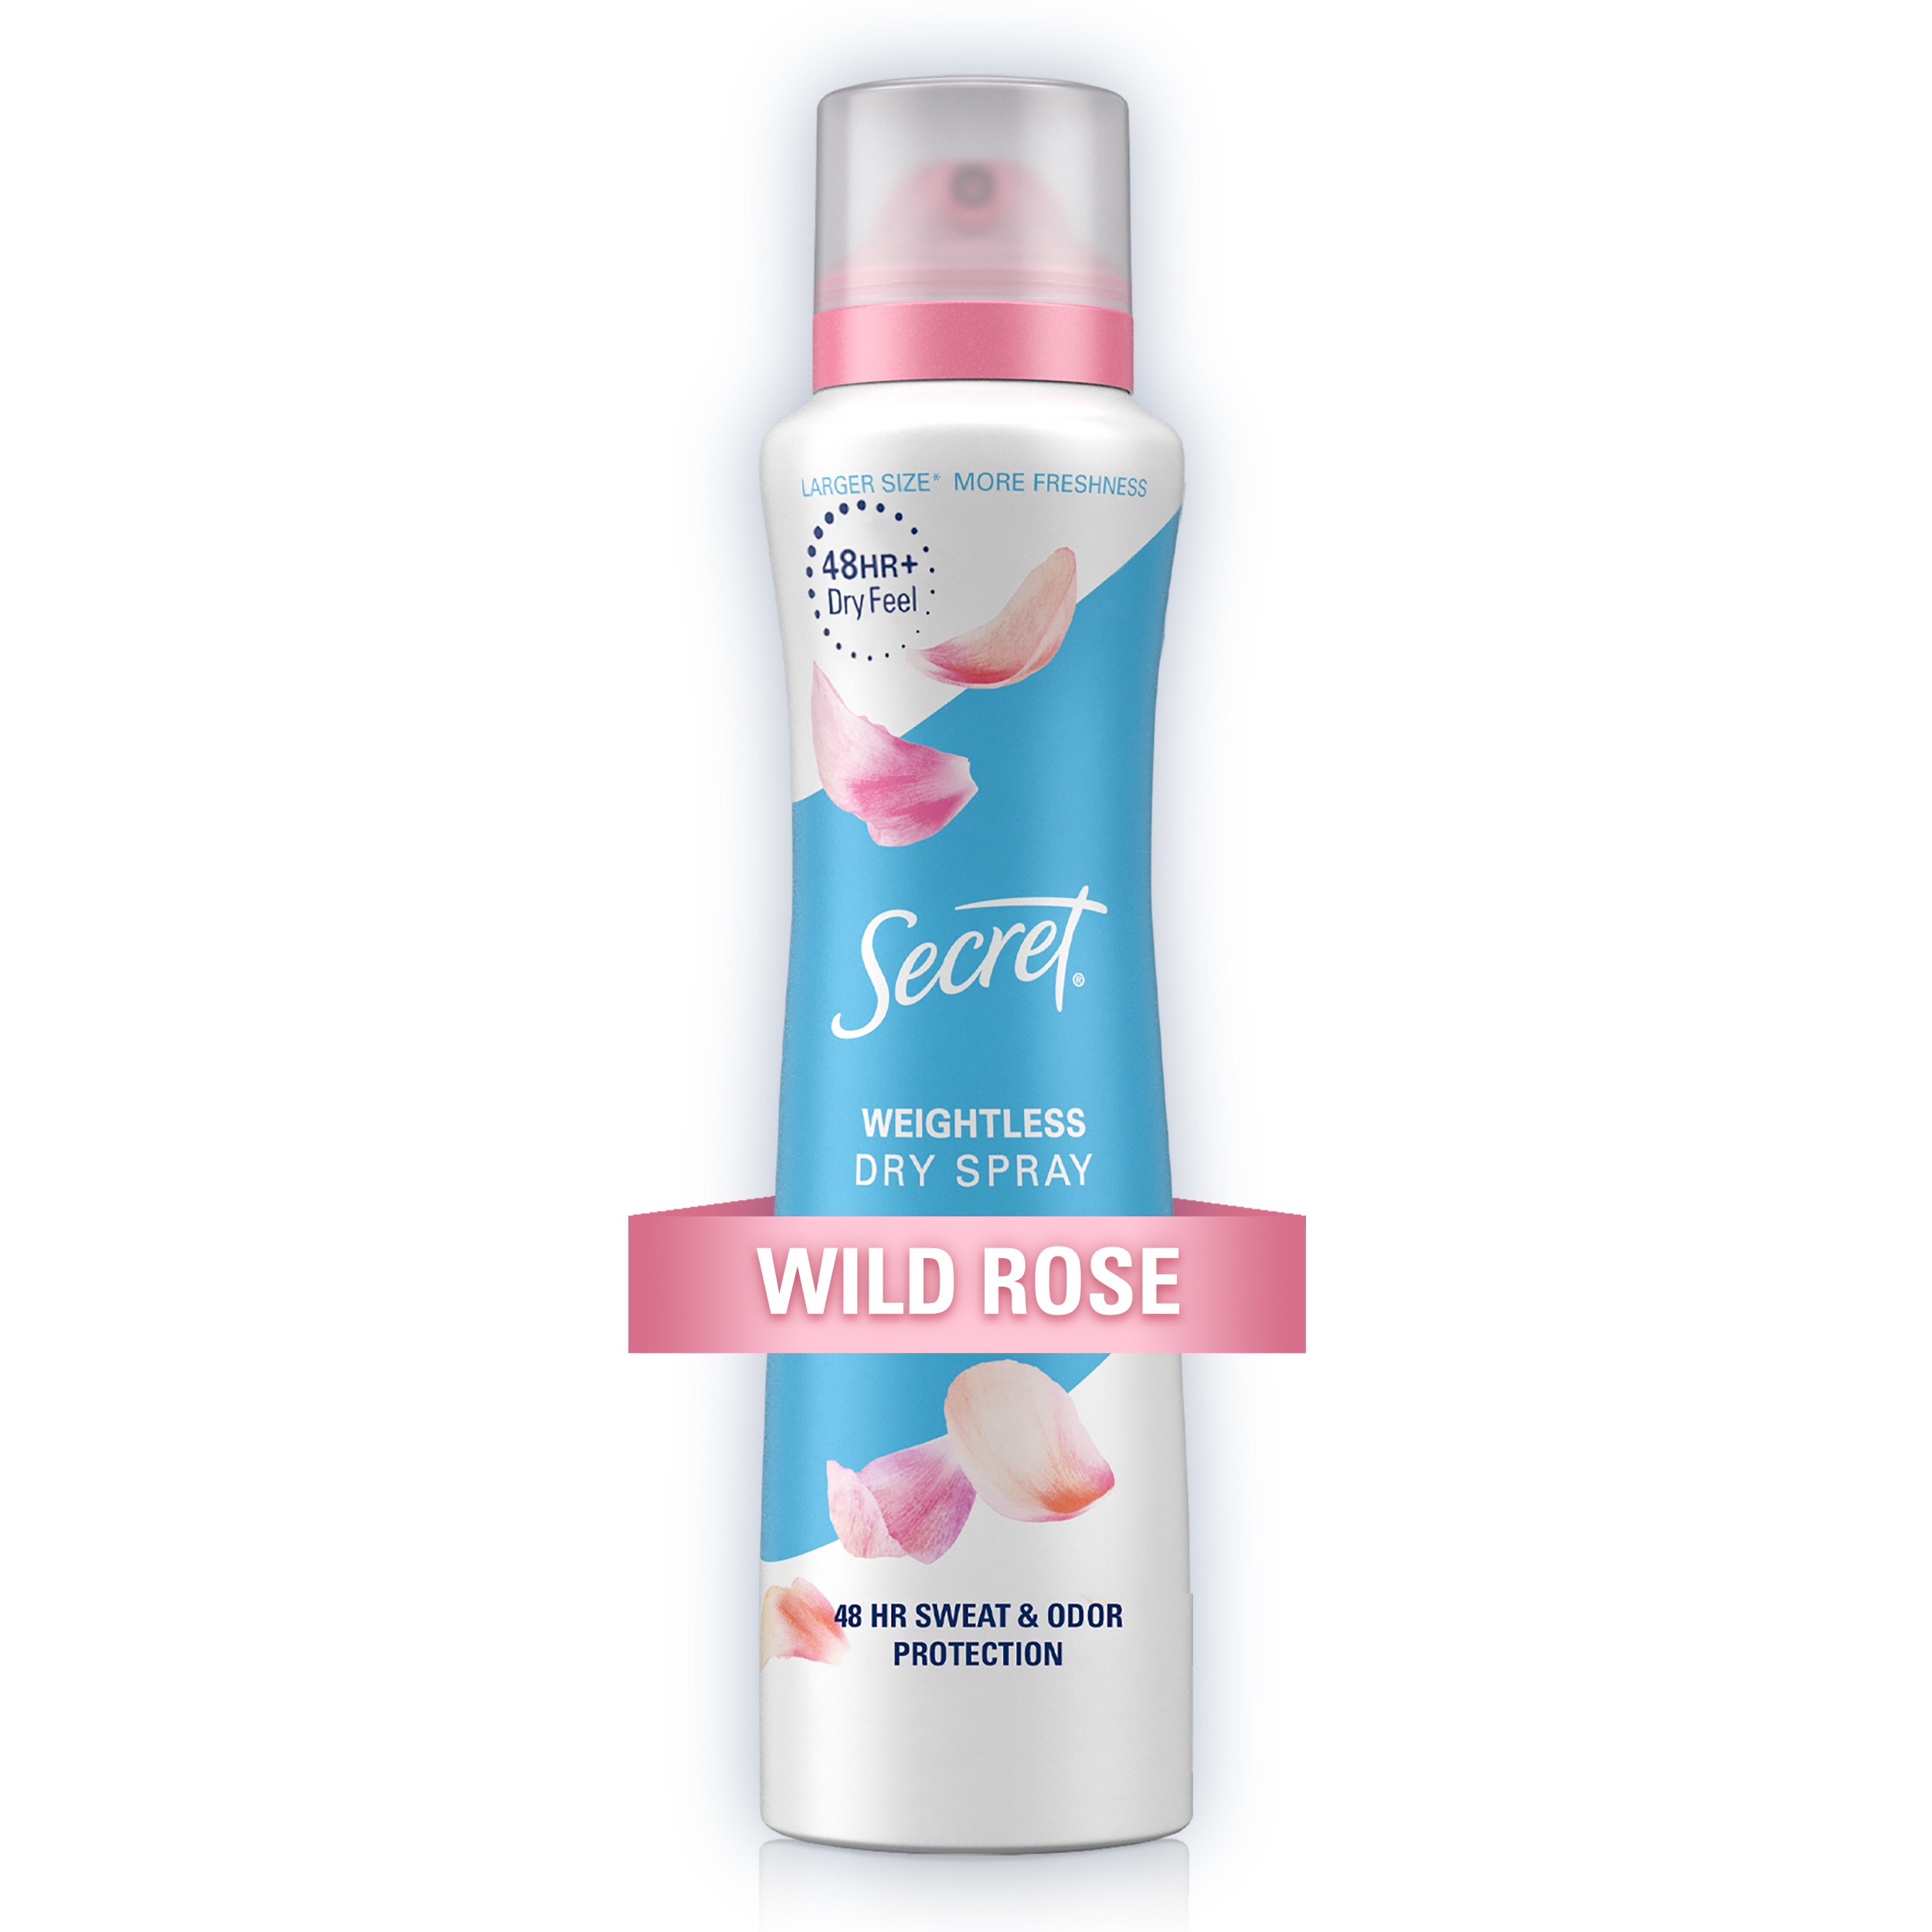 Secret Dry Spray Female Antiperspirant Deodorant, Wild Rose and Argan Oil, 4.1oz - image 1 of 11